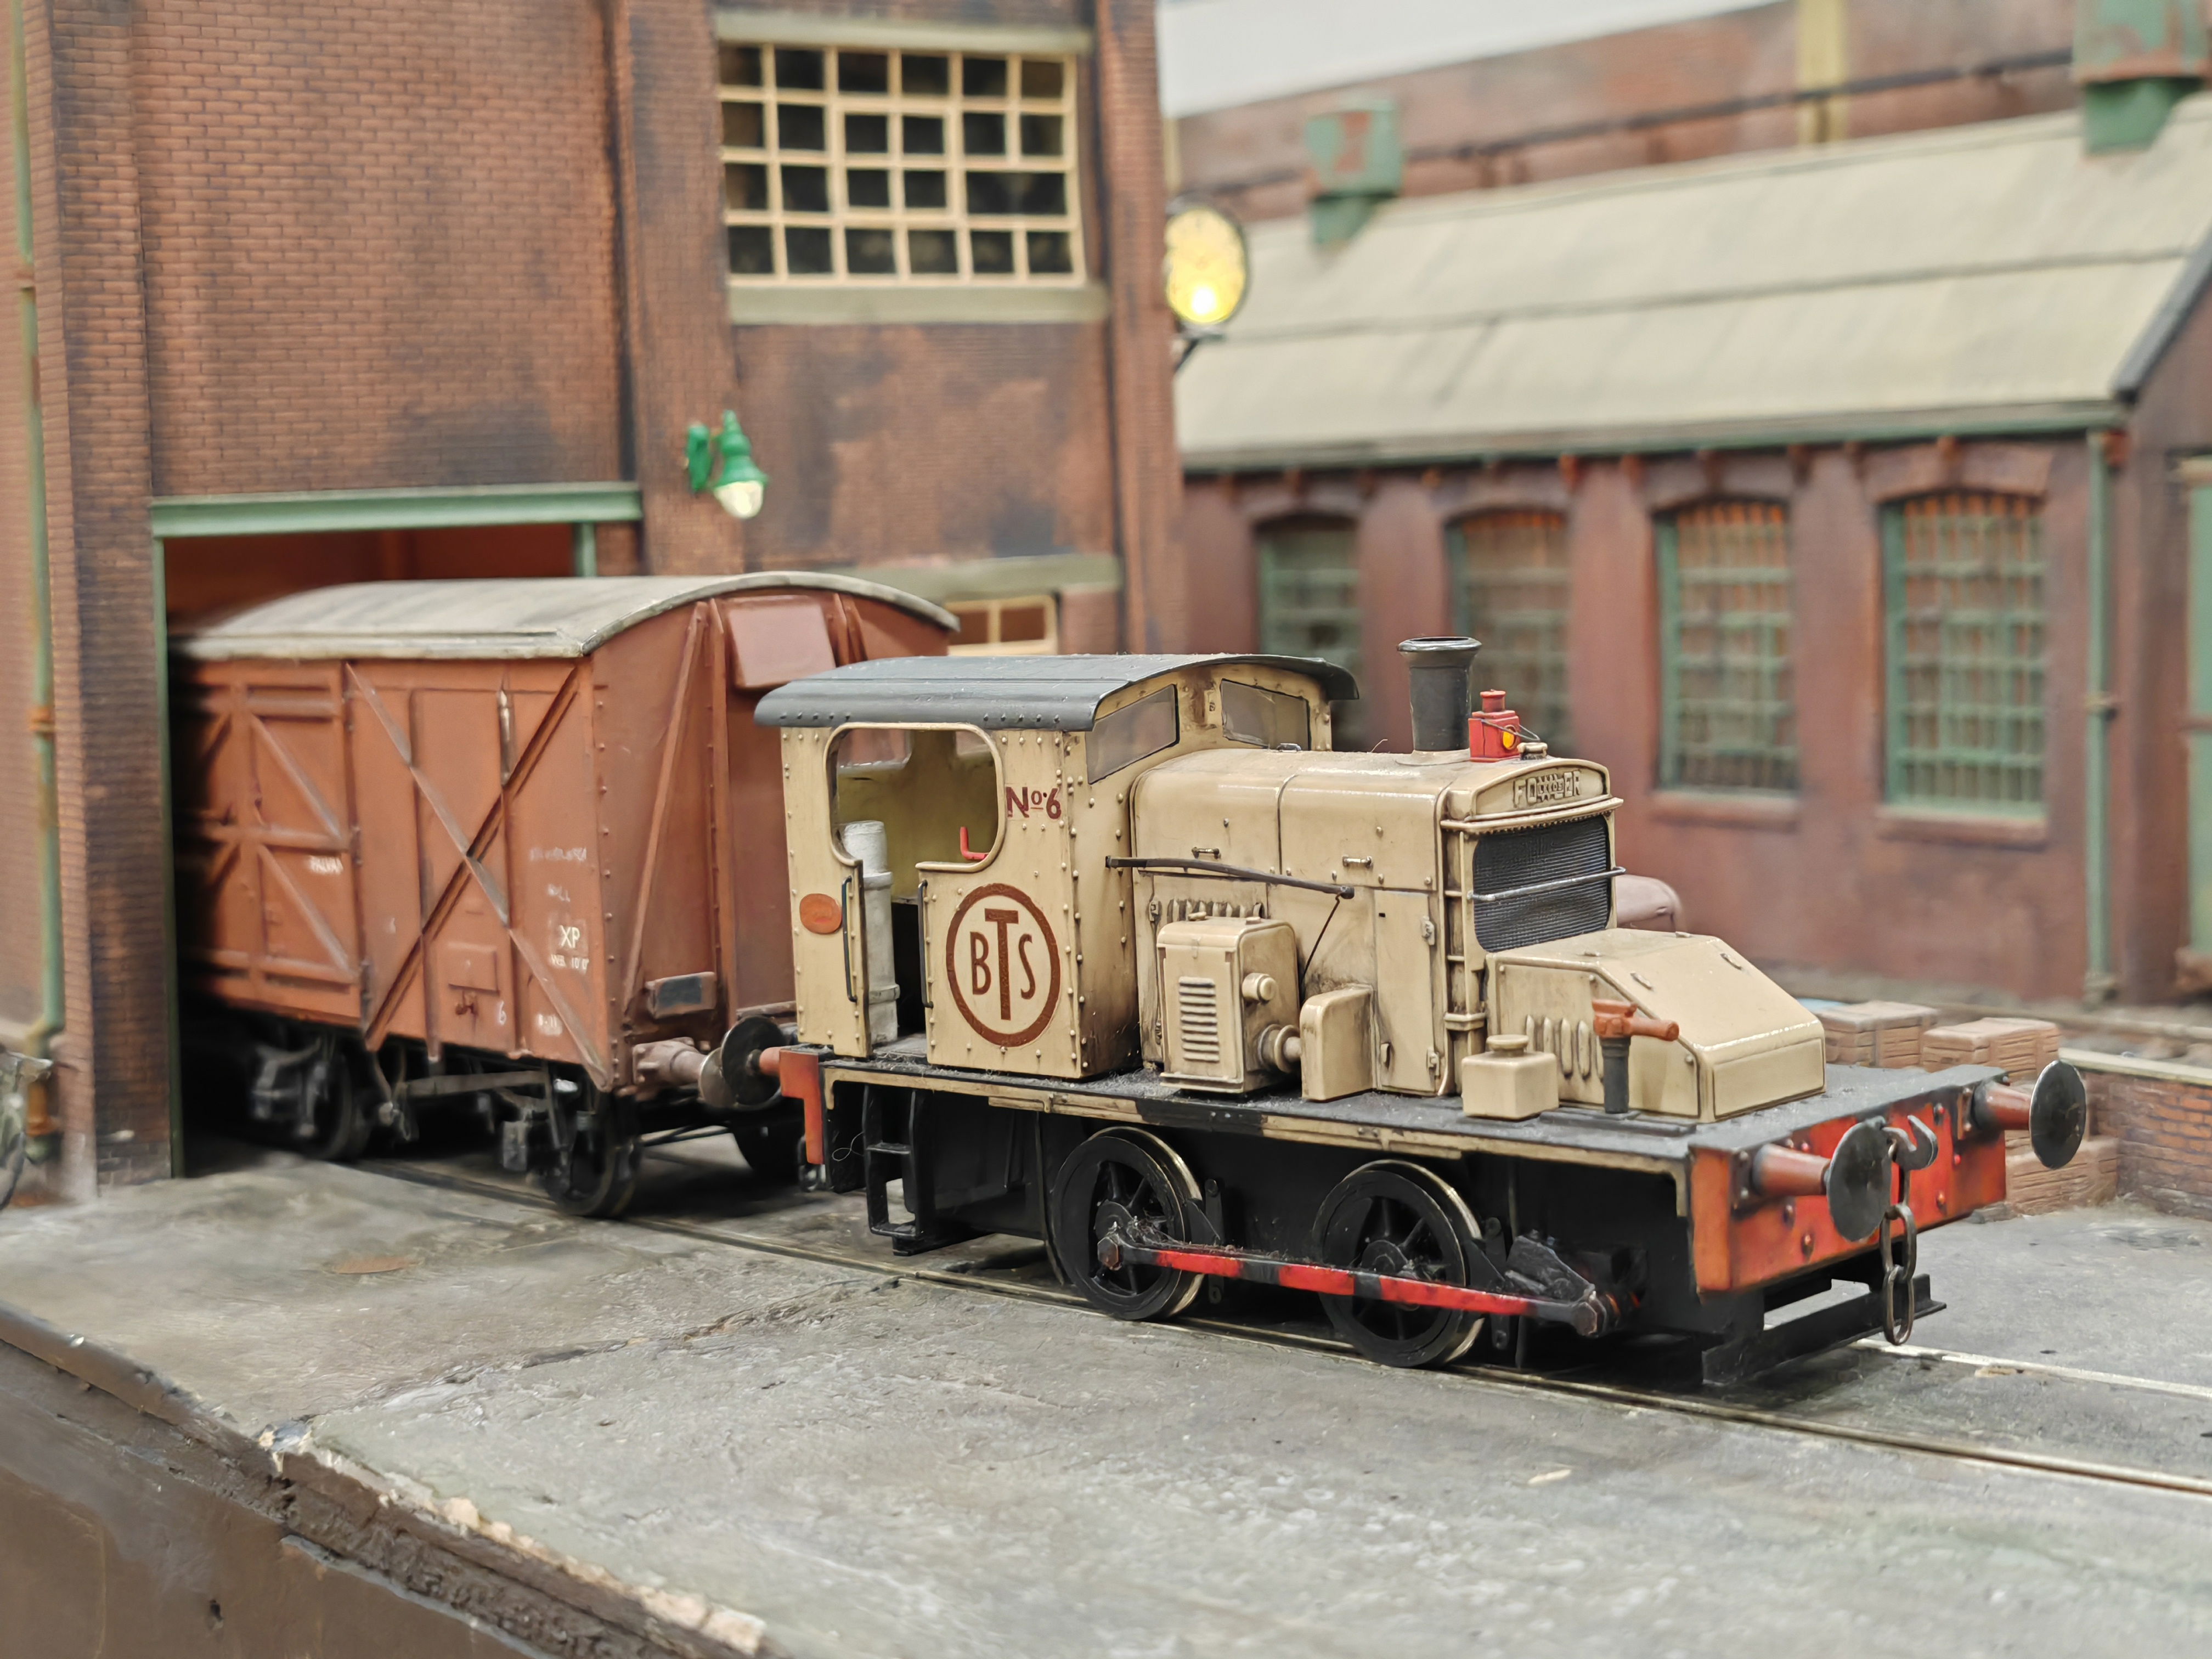 Bury, Thorn and Sons O gauge model railway.